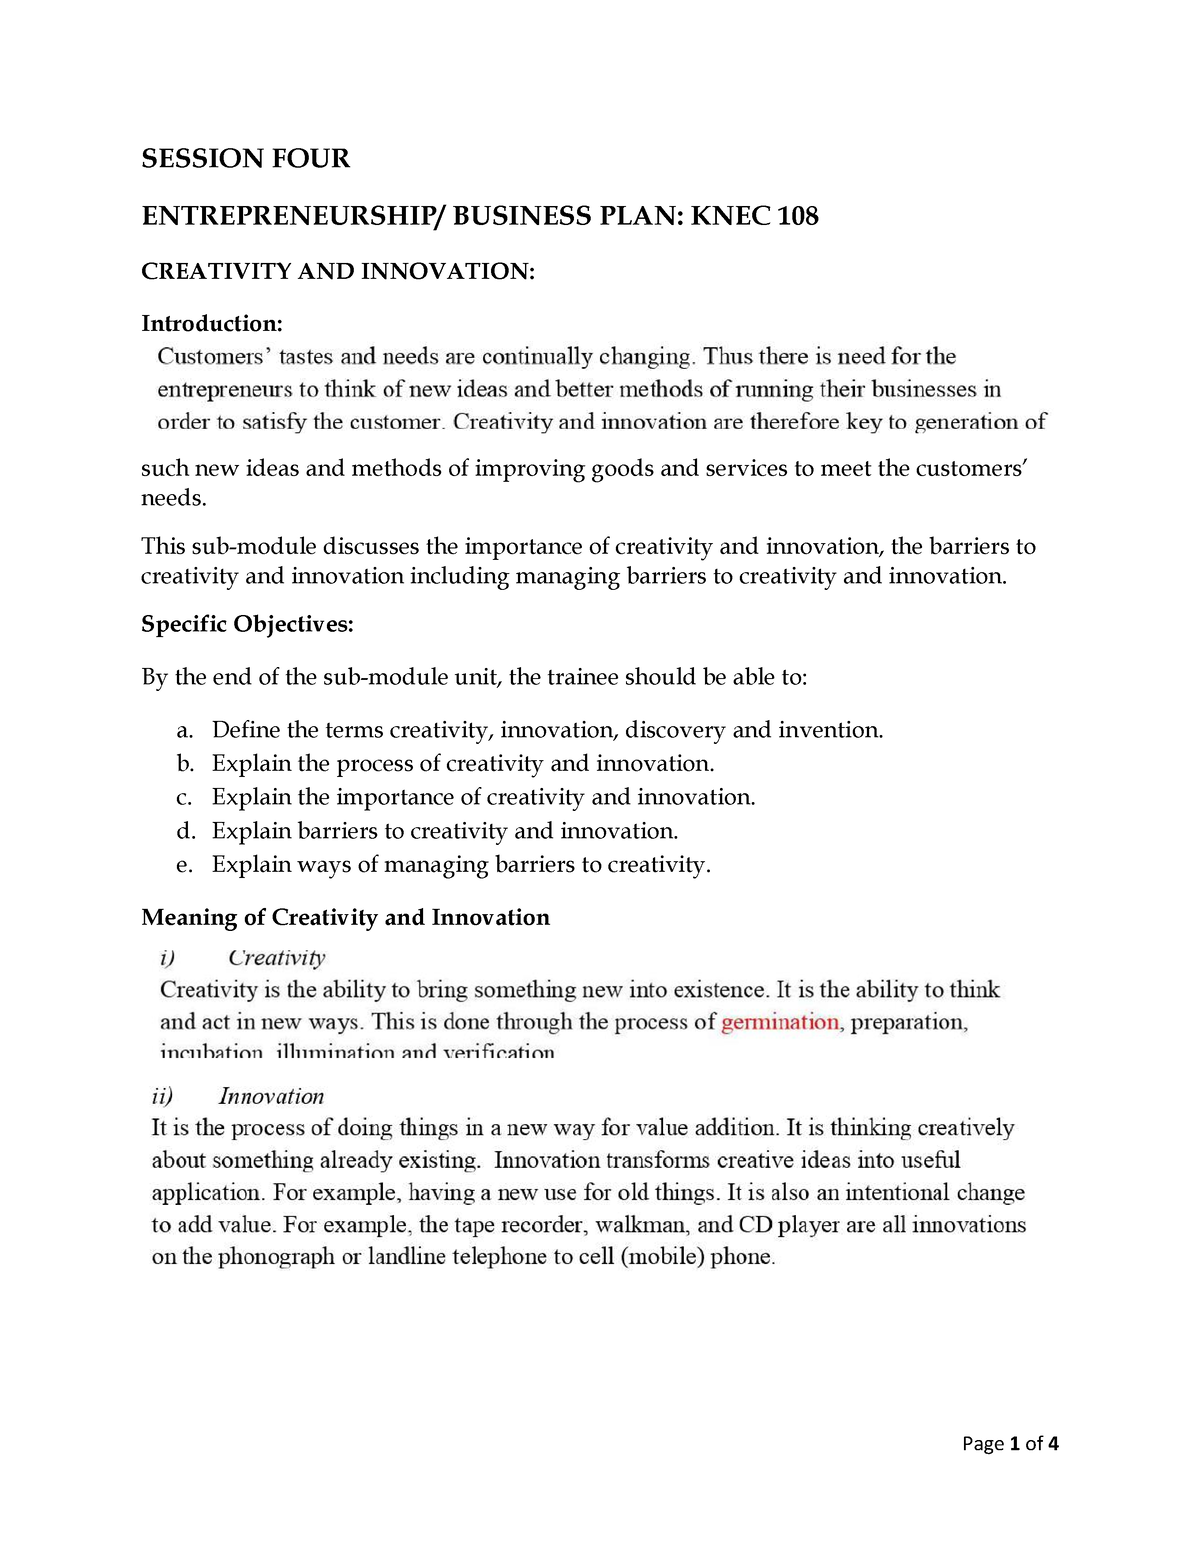 business plan knec pdf